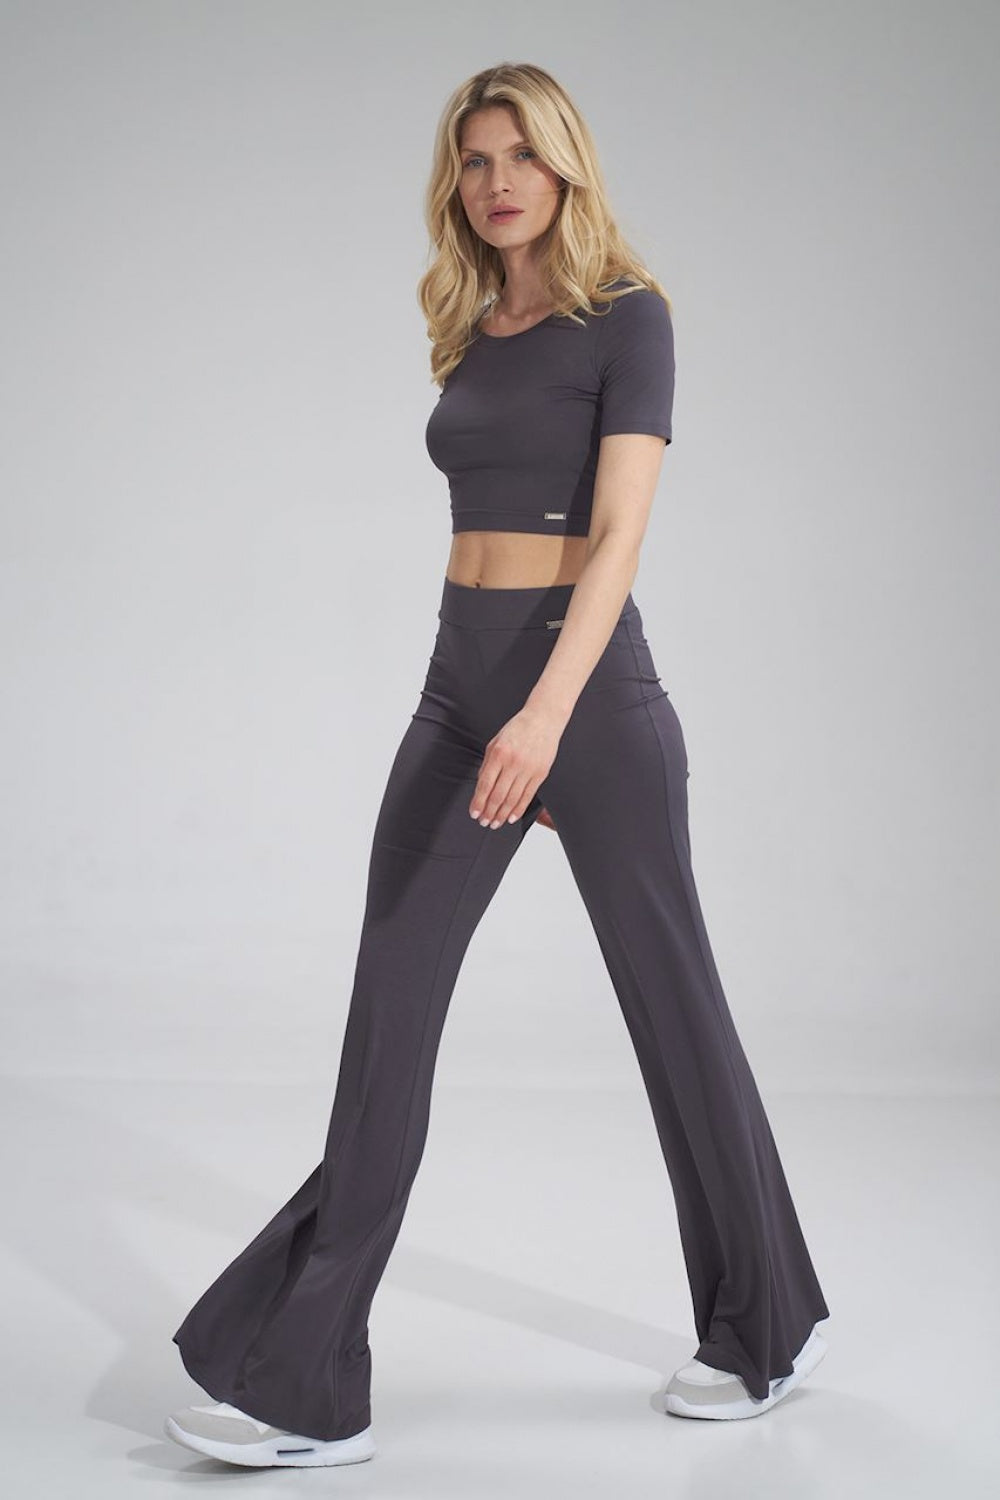 Women trousers model 154712 Elsy Style Pants, Trousers, Shorts